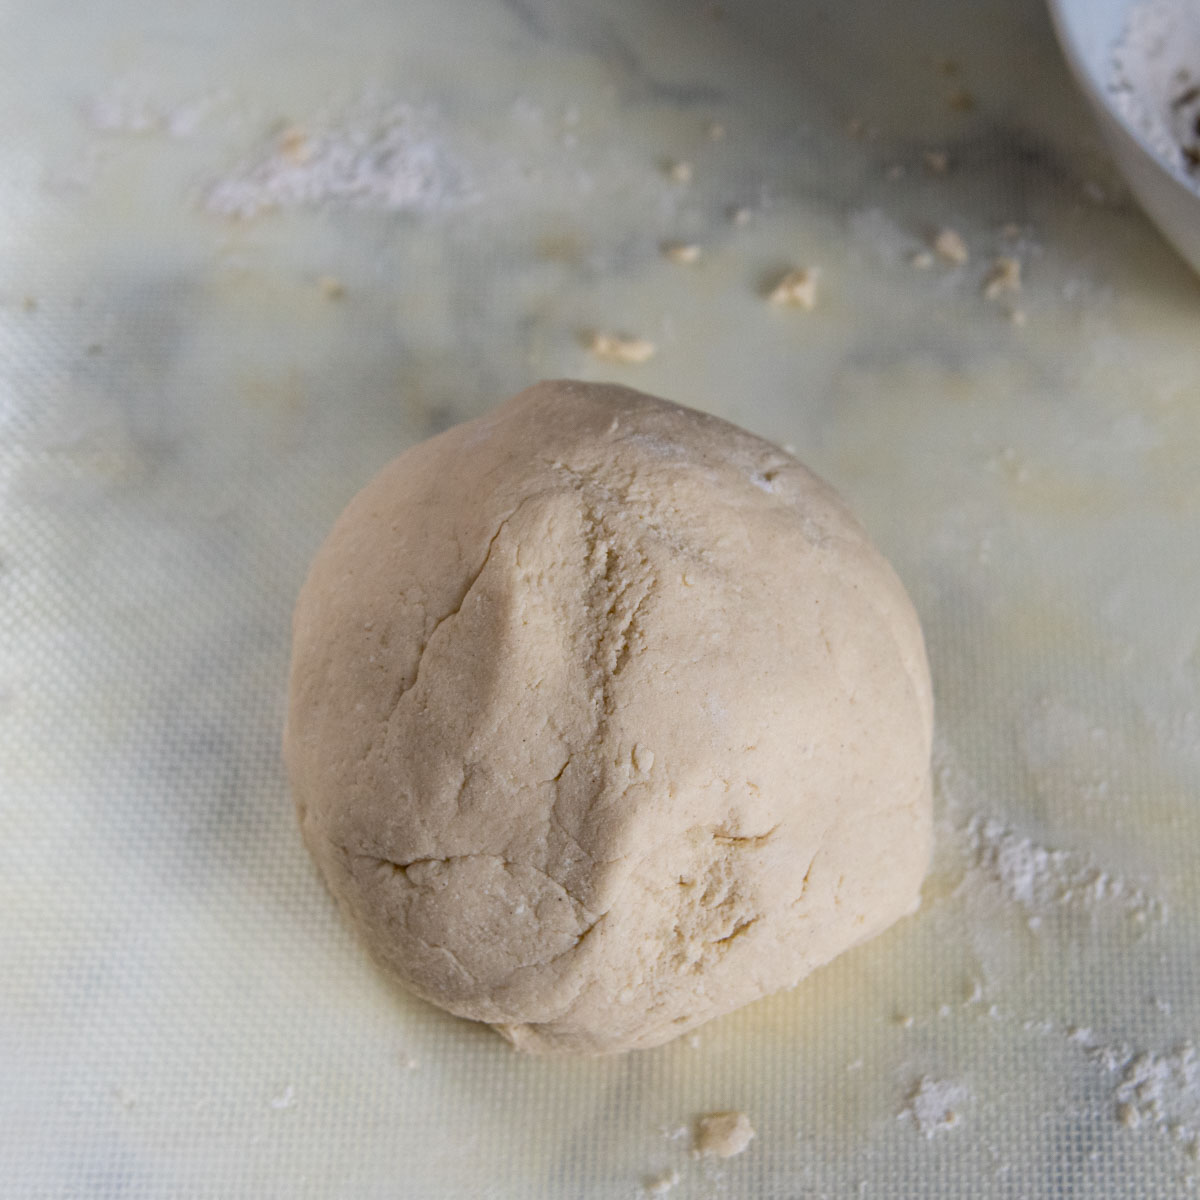 the dough shaped into a ball.